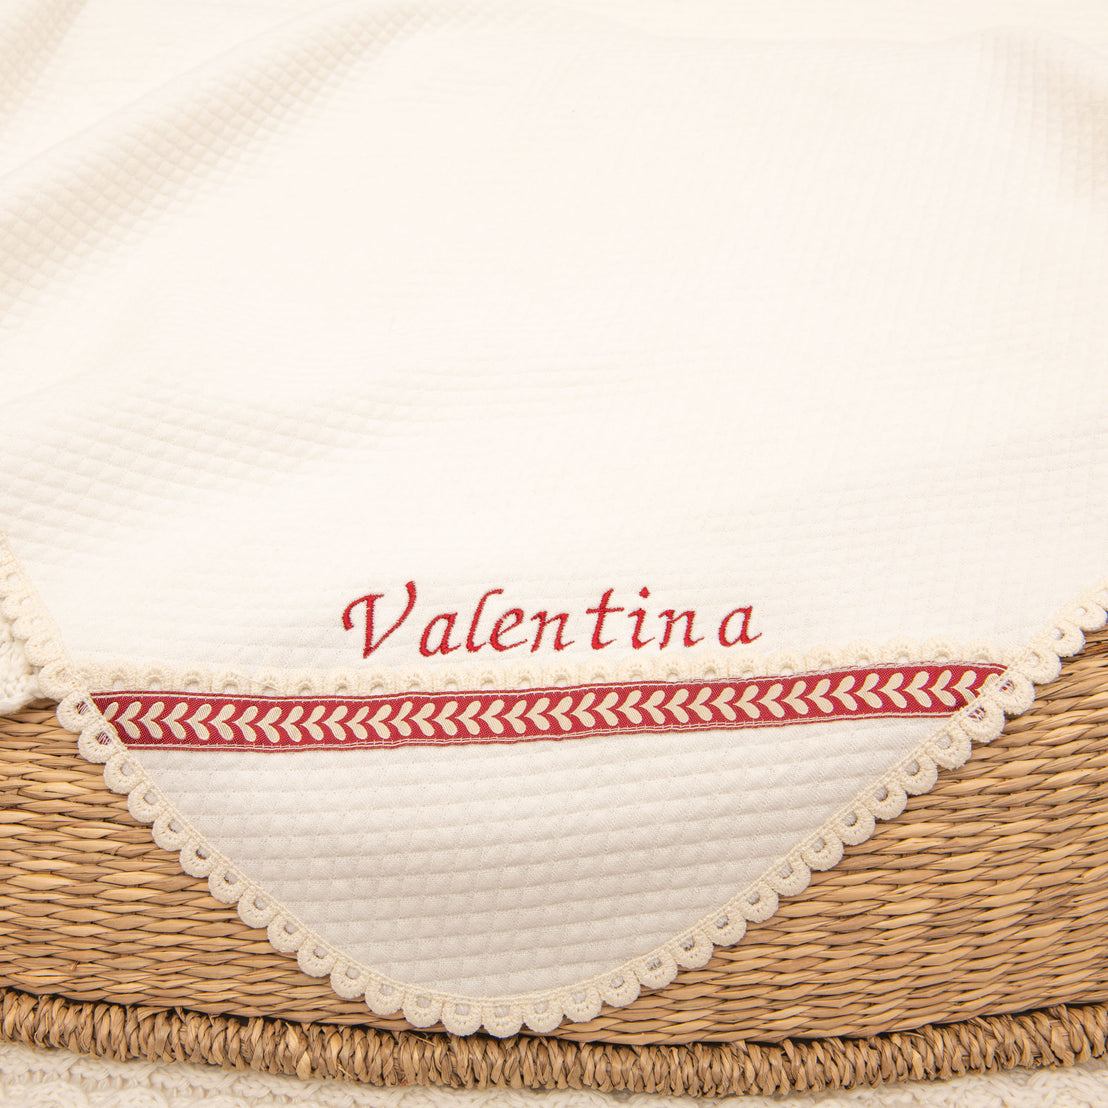 Valentina Gift Set - Save 10%